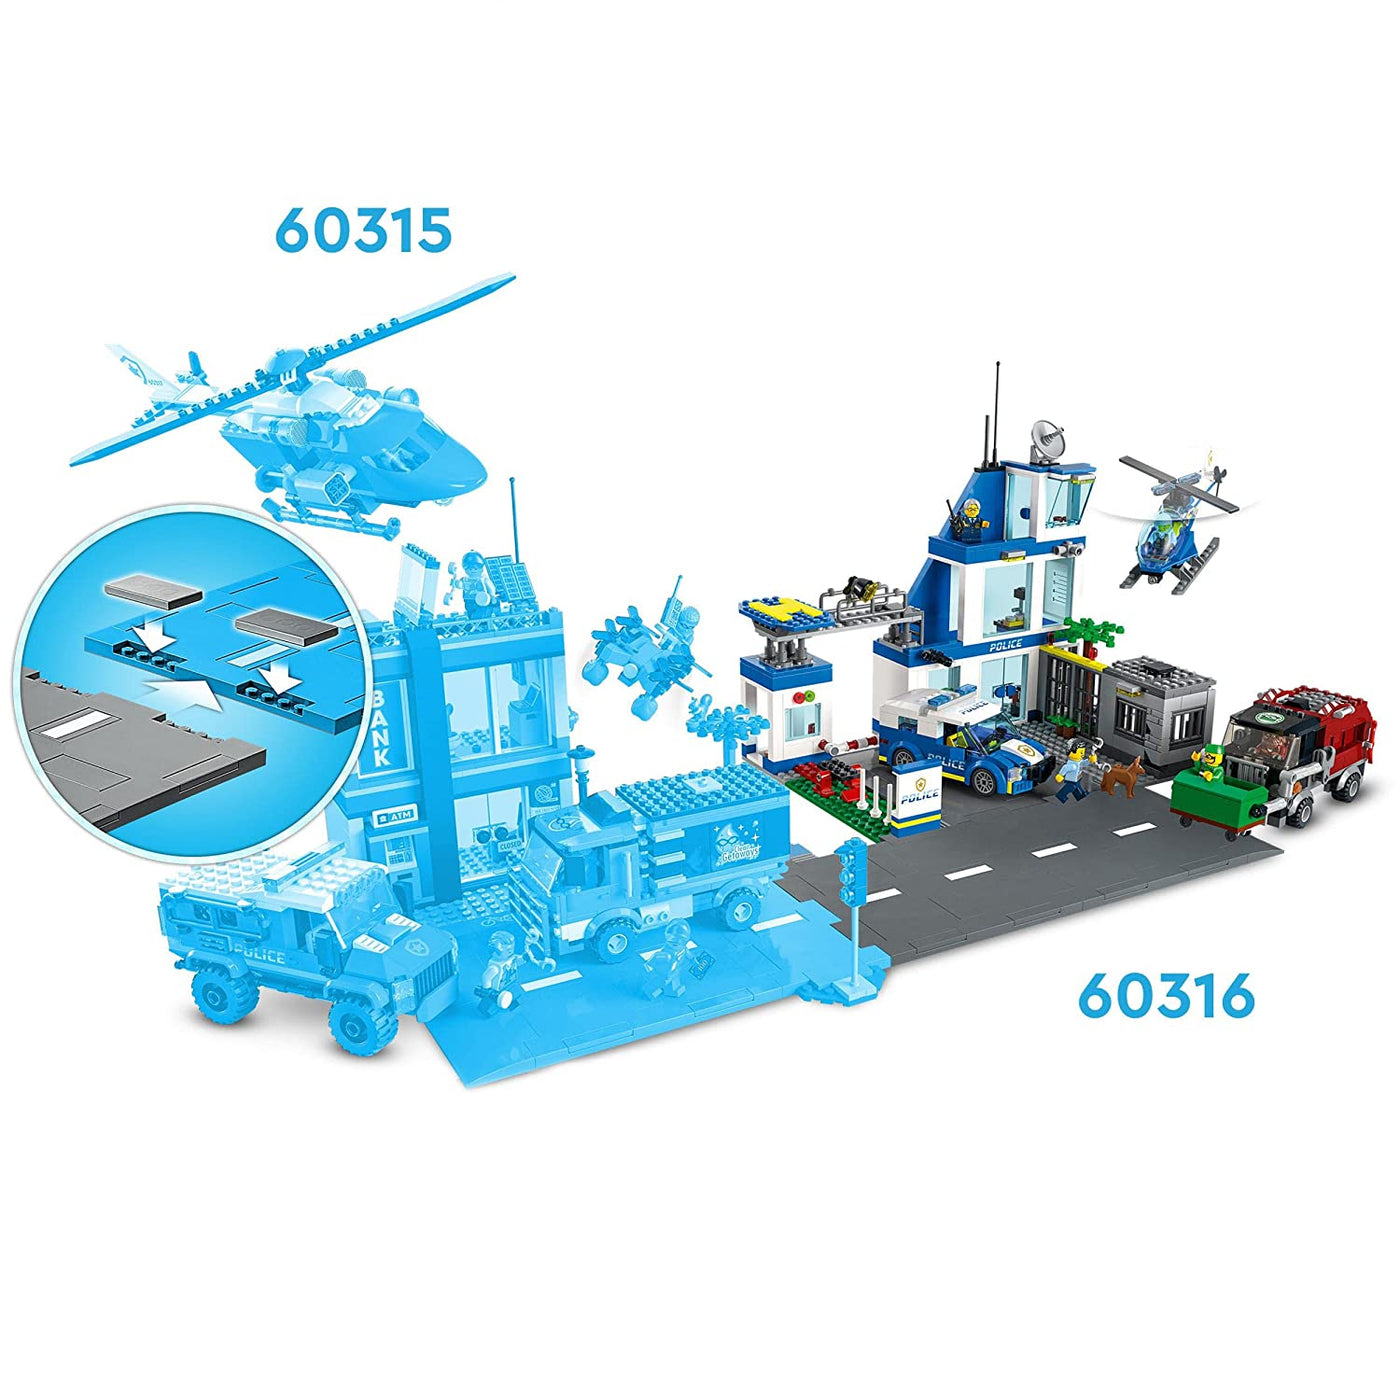 LEGO City: Police Station 60316 | LEGO®